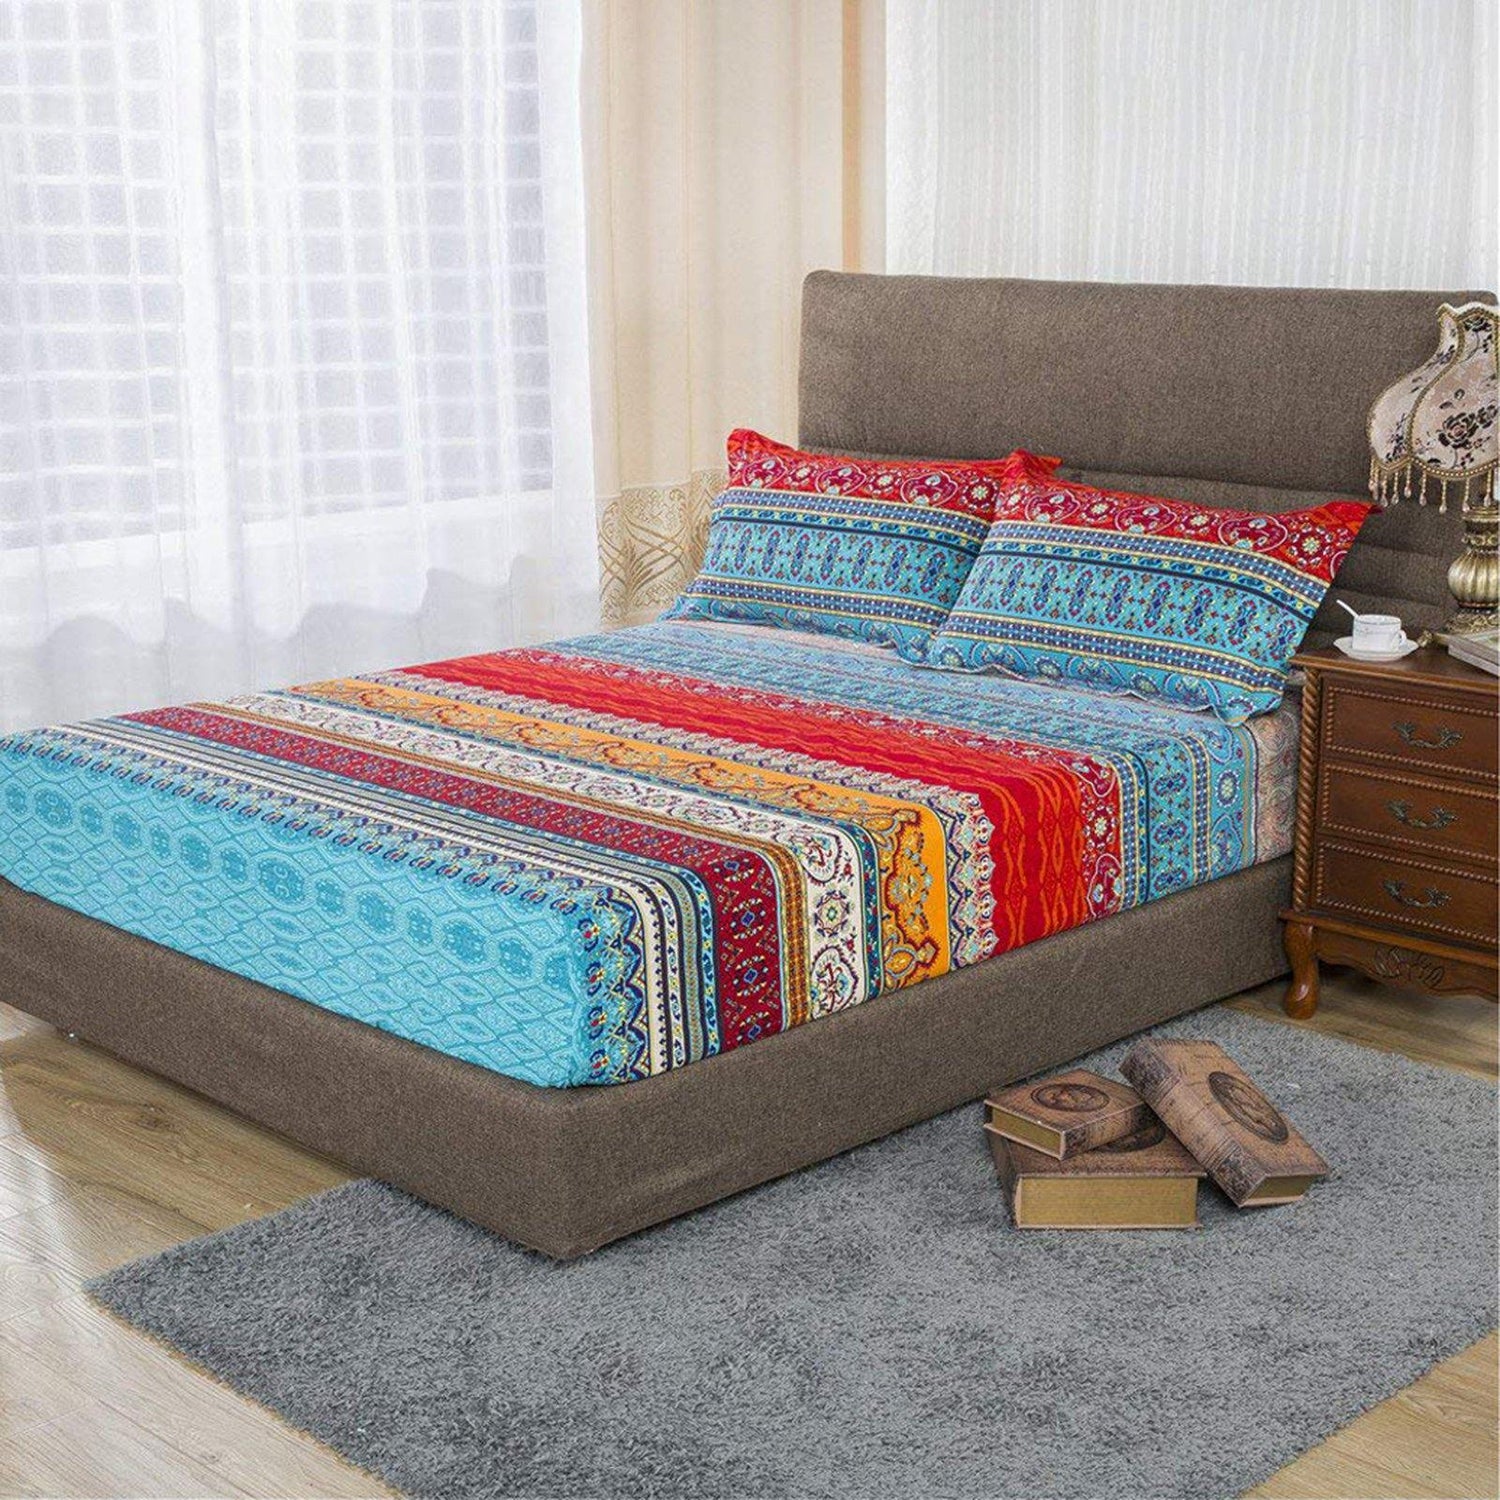 WONGS BEDDING Bohemian Style Sheet Set 4 Piece Set - Wongs bedding